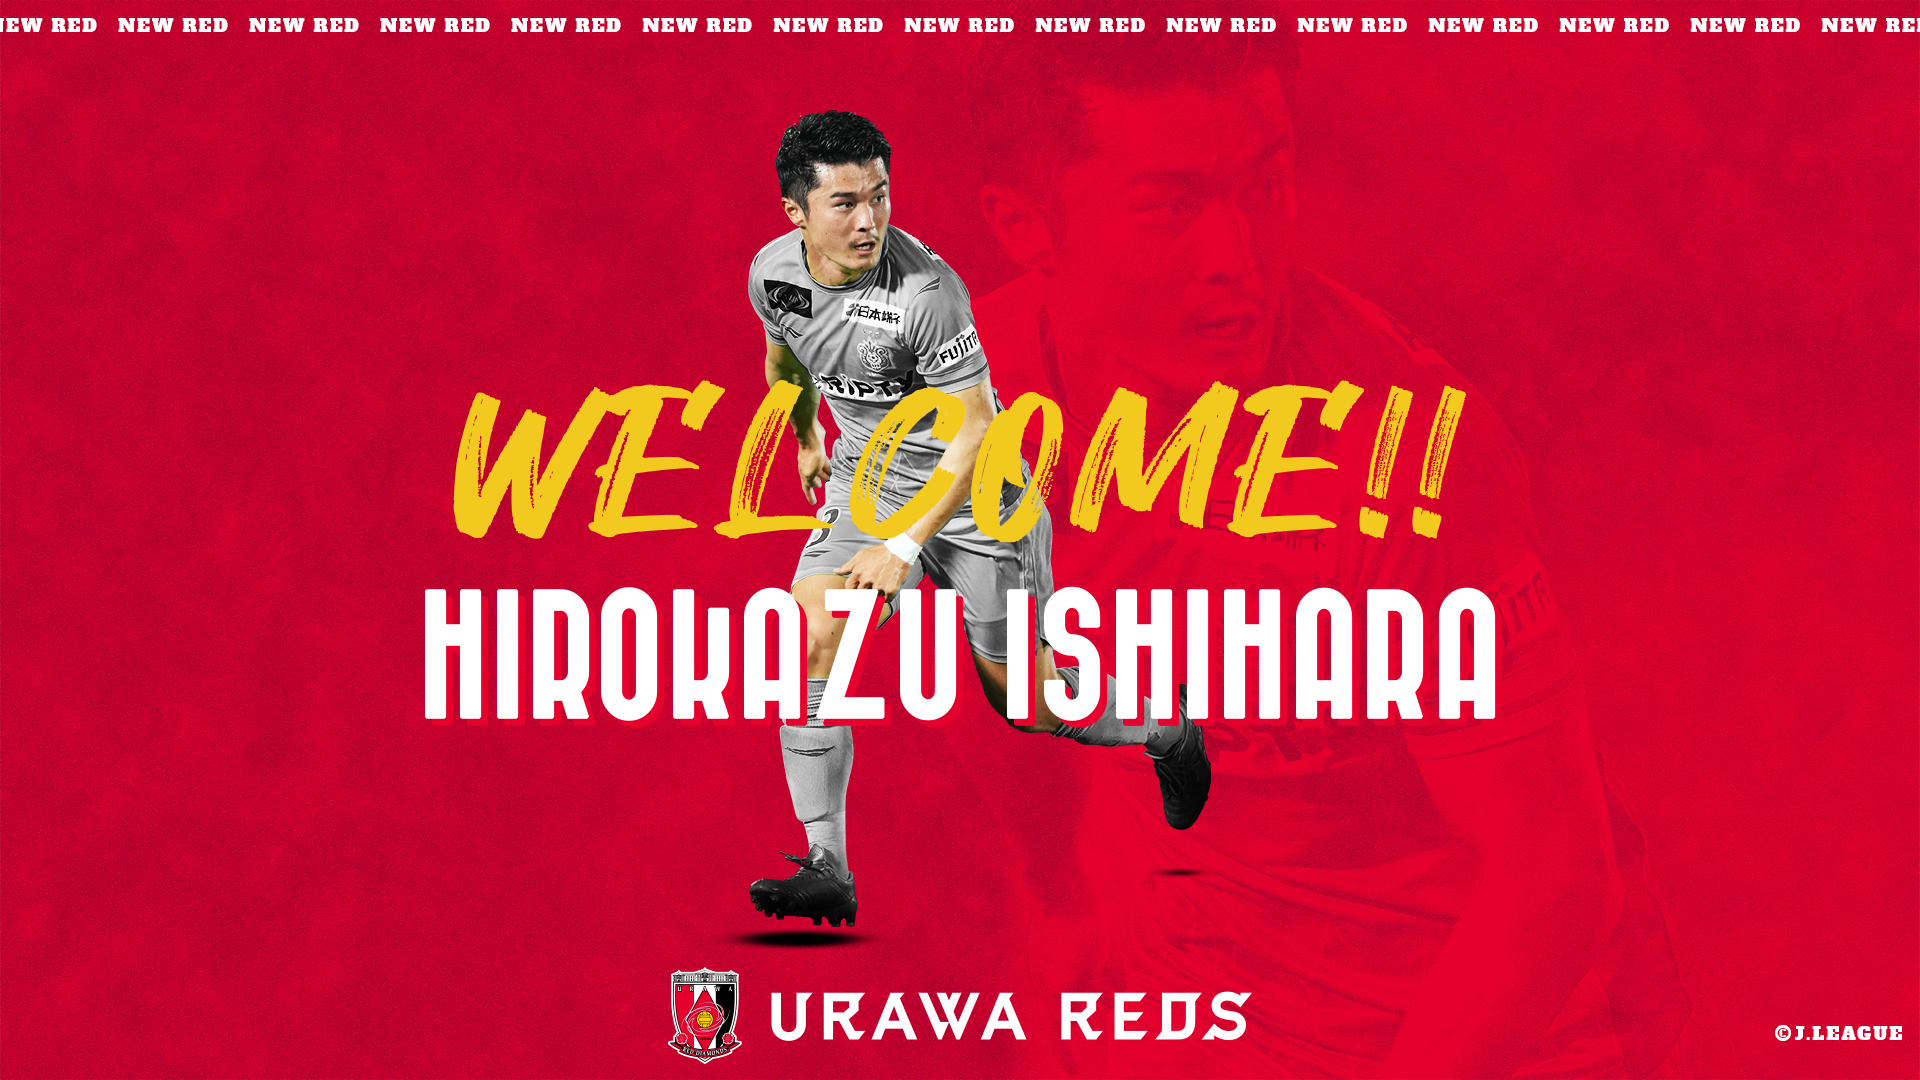 Notice of complete transfer of player Hirokazu Ishihara